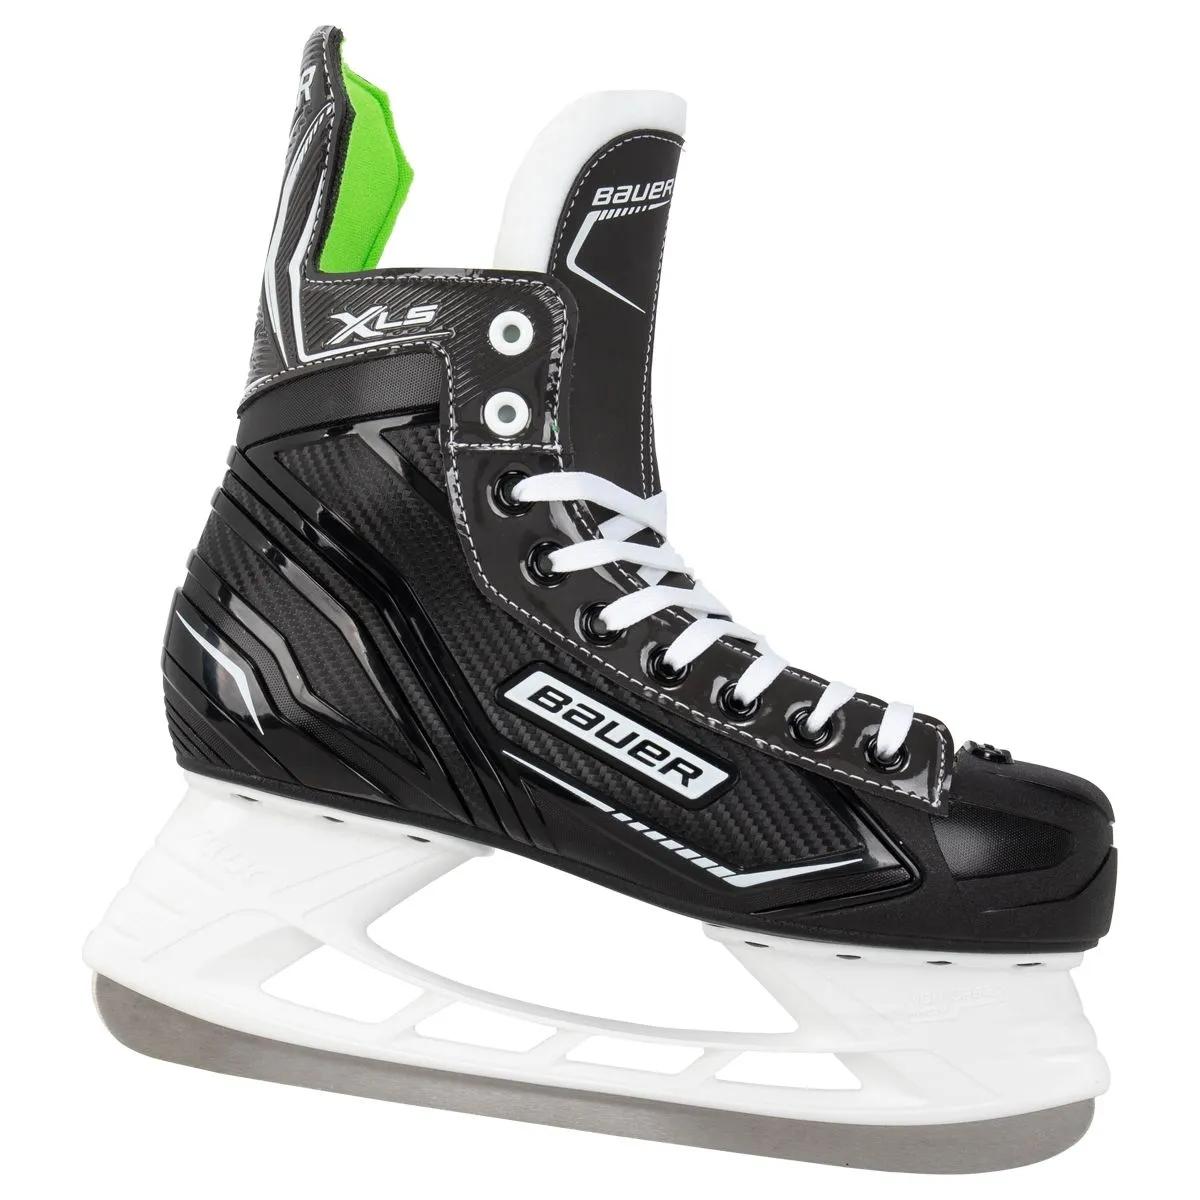 Bauer X-LS Sr. Hockey Skatesproduct zoom image #3